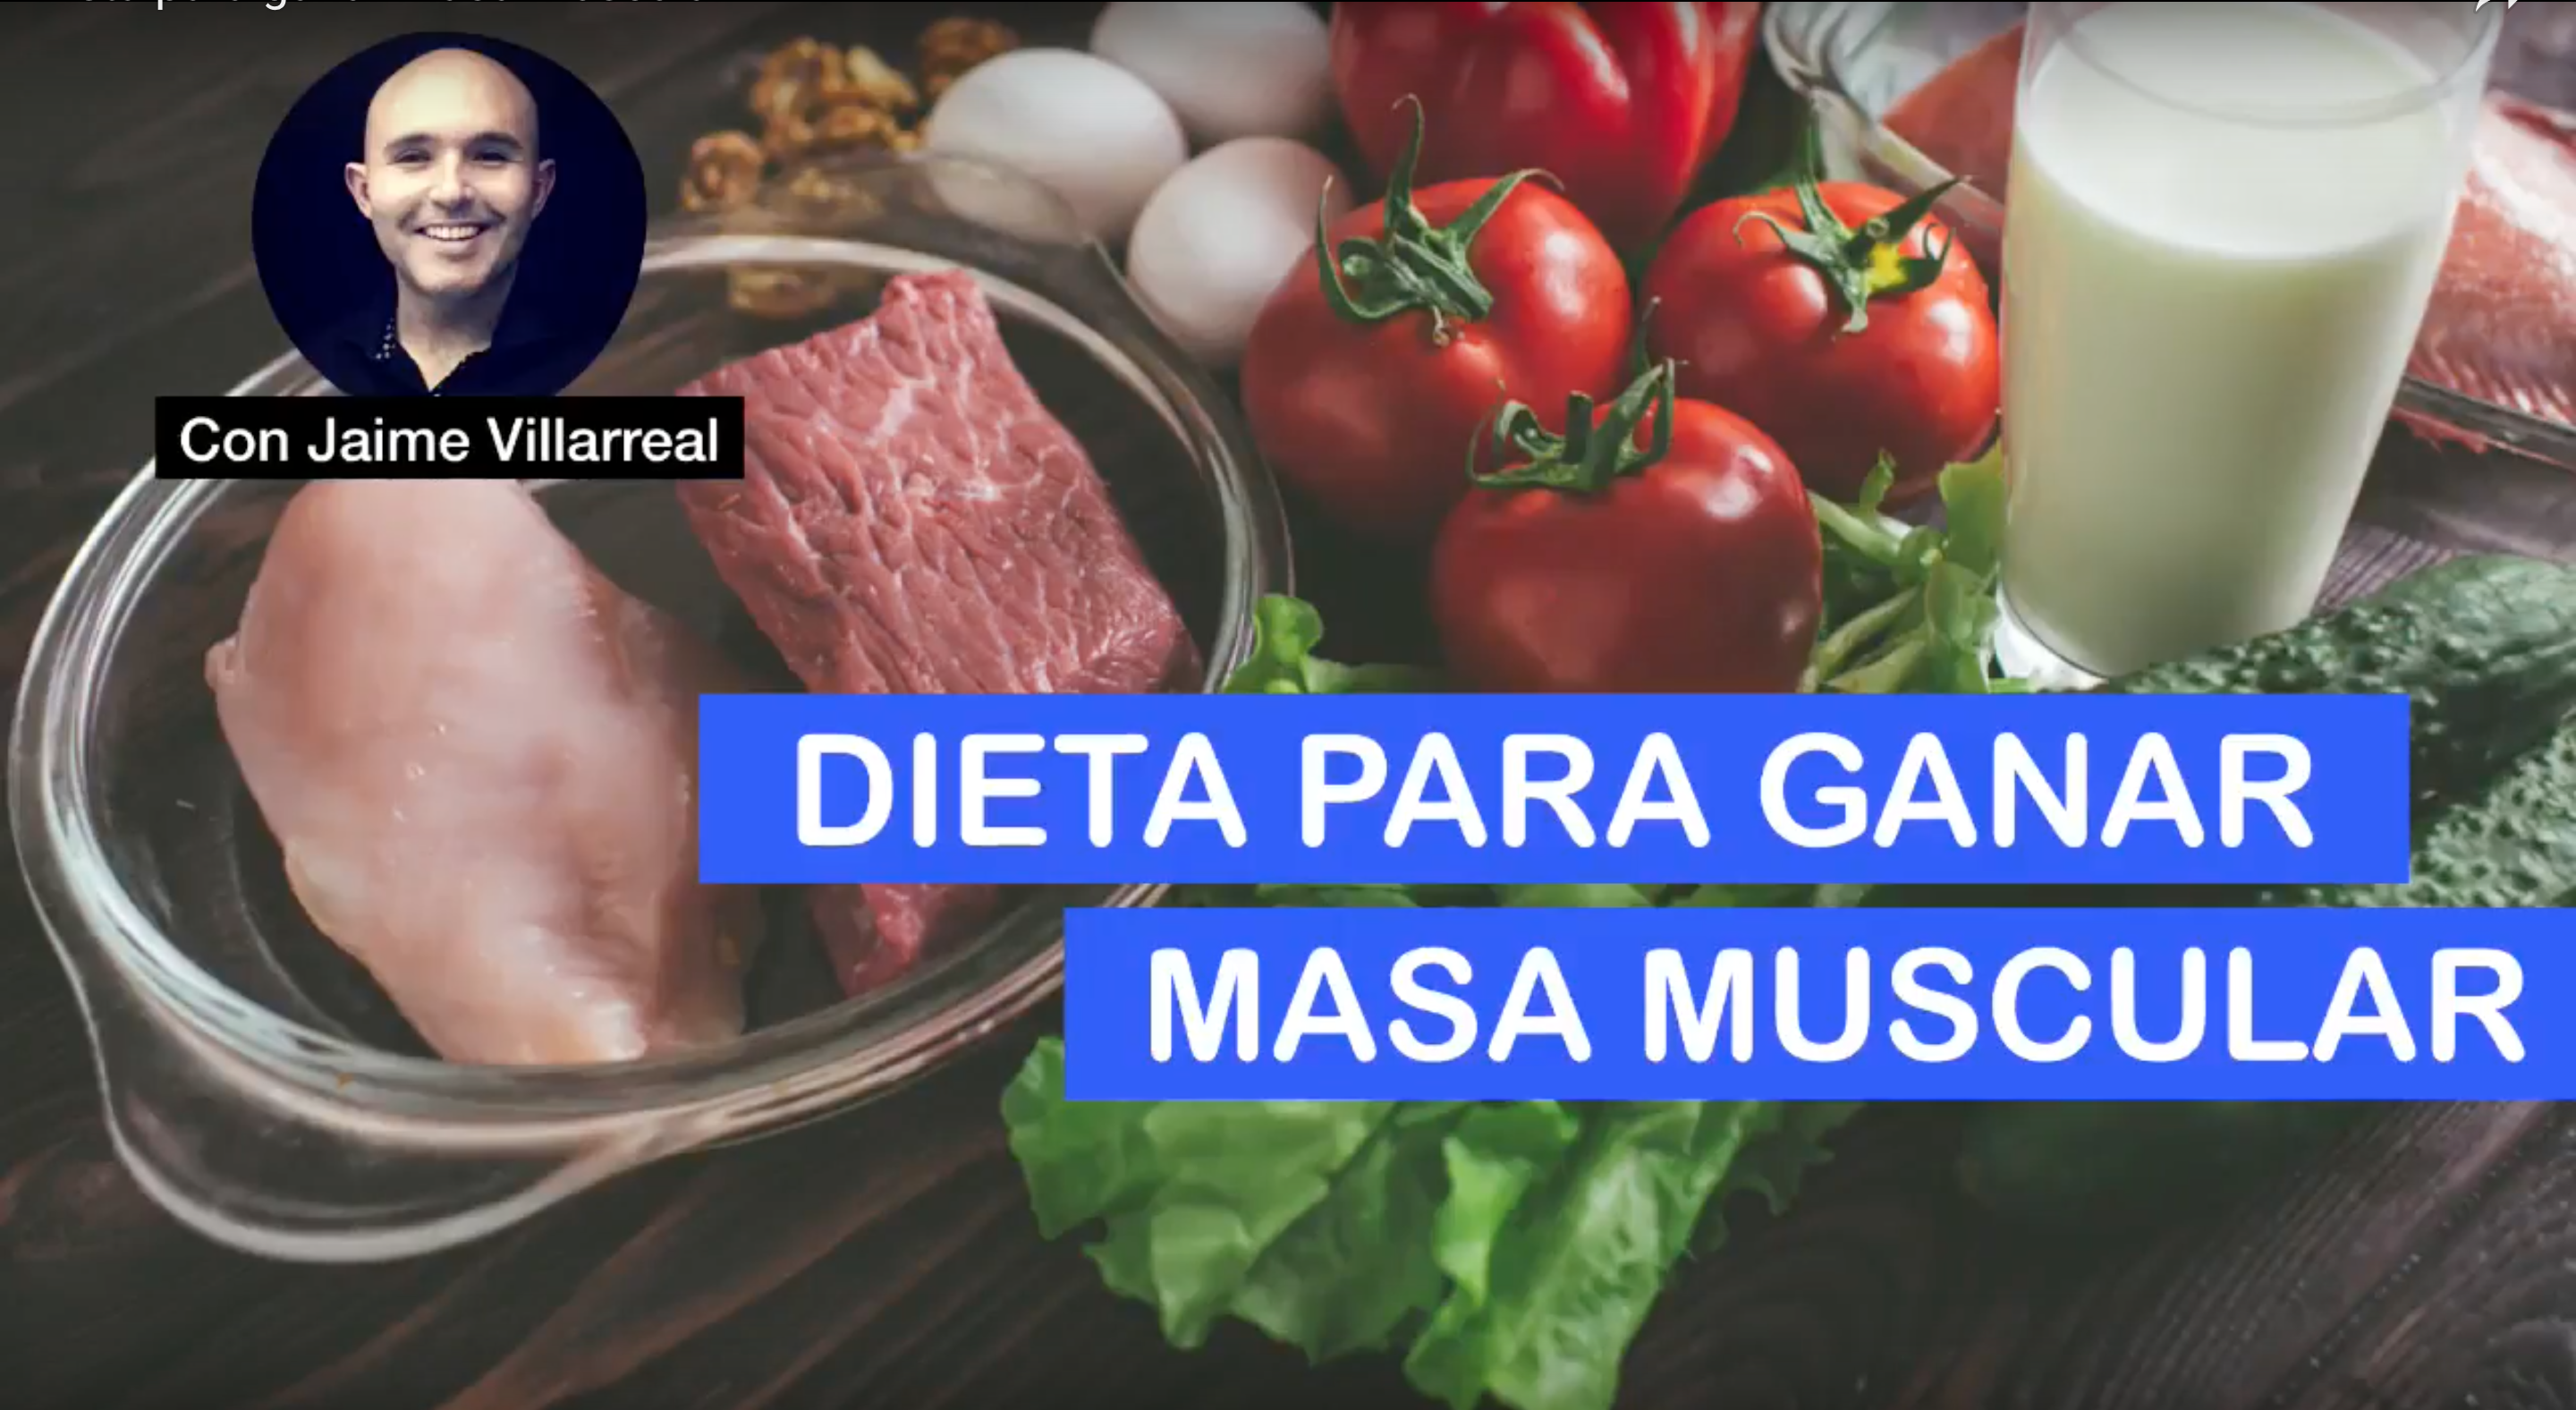 Dieta Para Ganar Masa Muscular Video Revista Corposano 0970